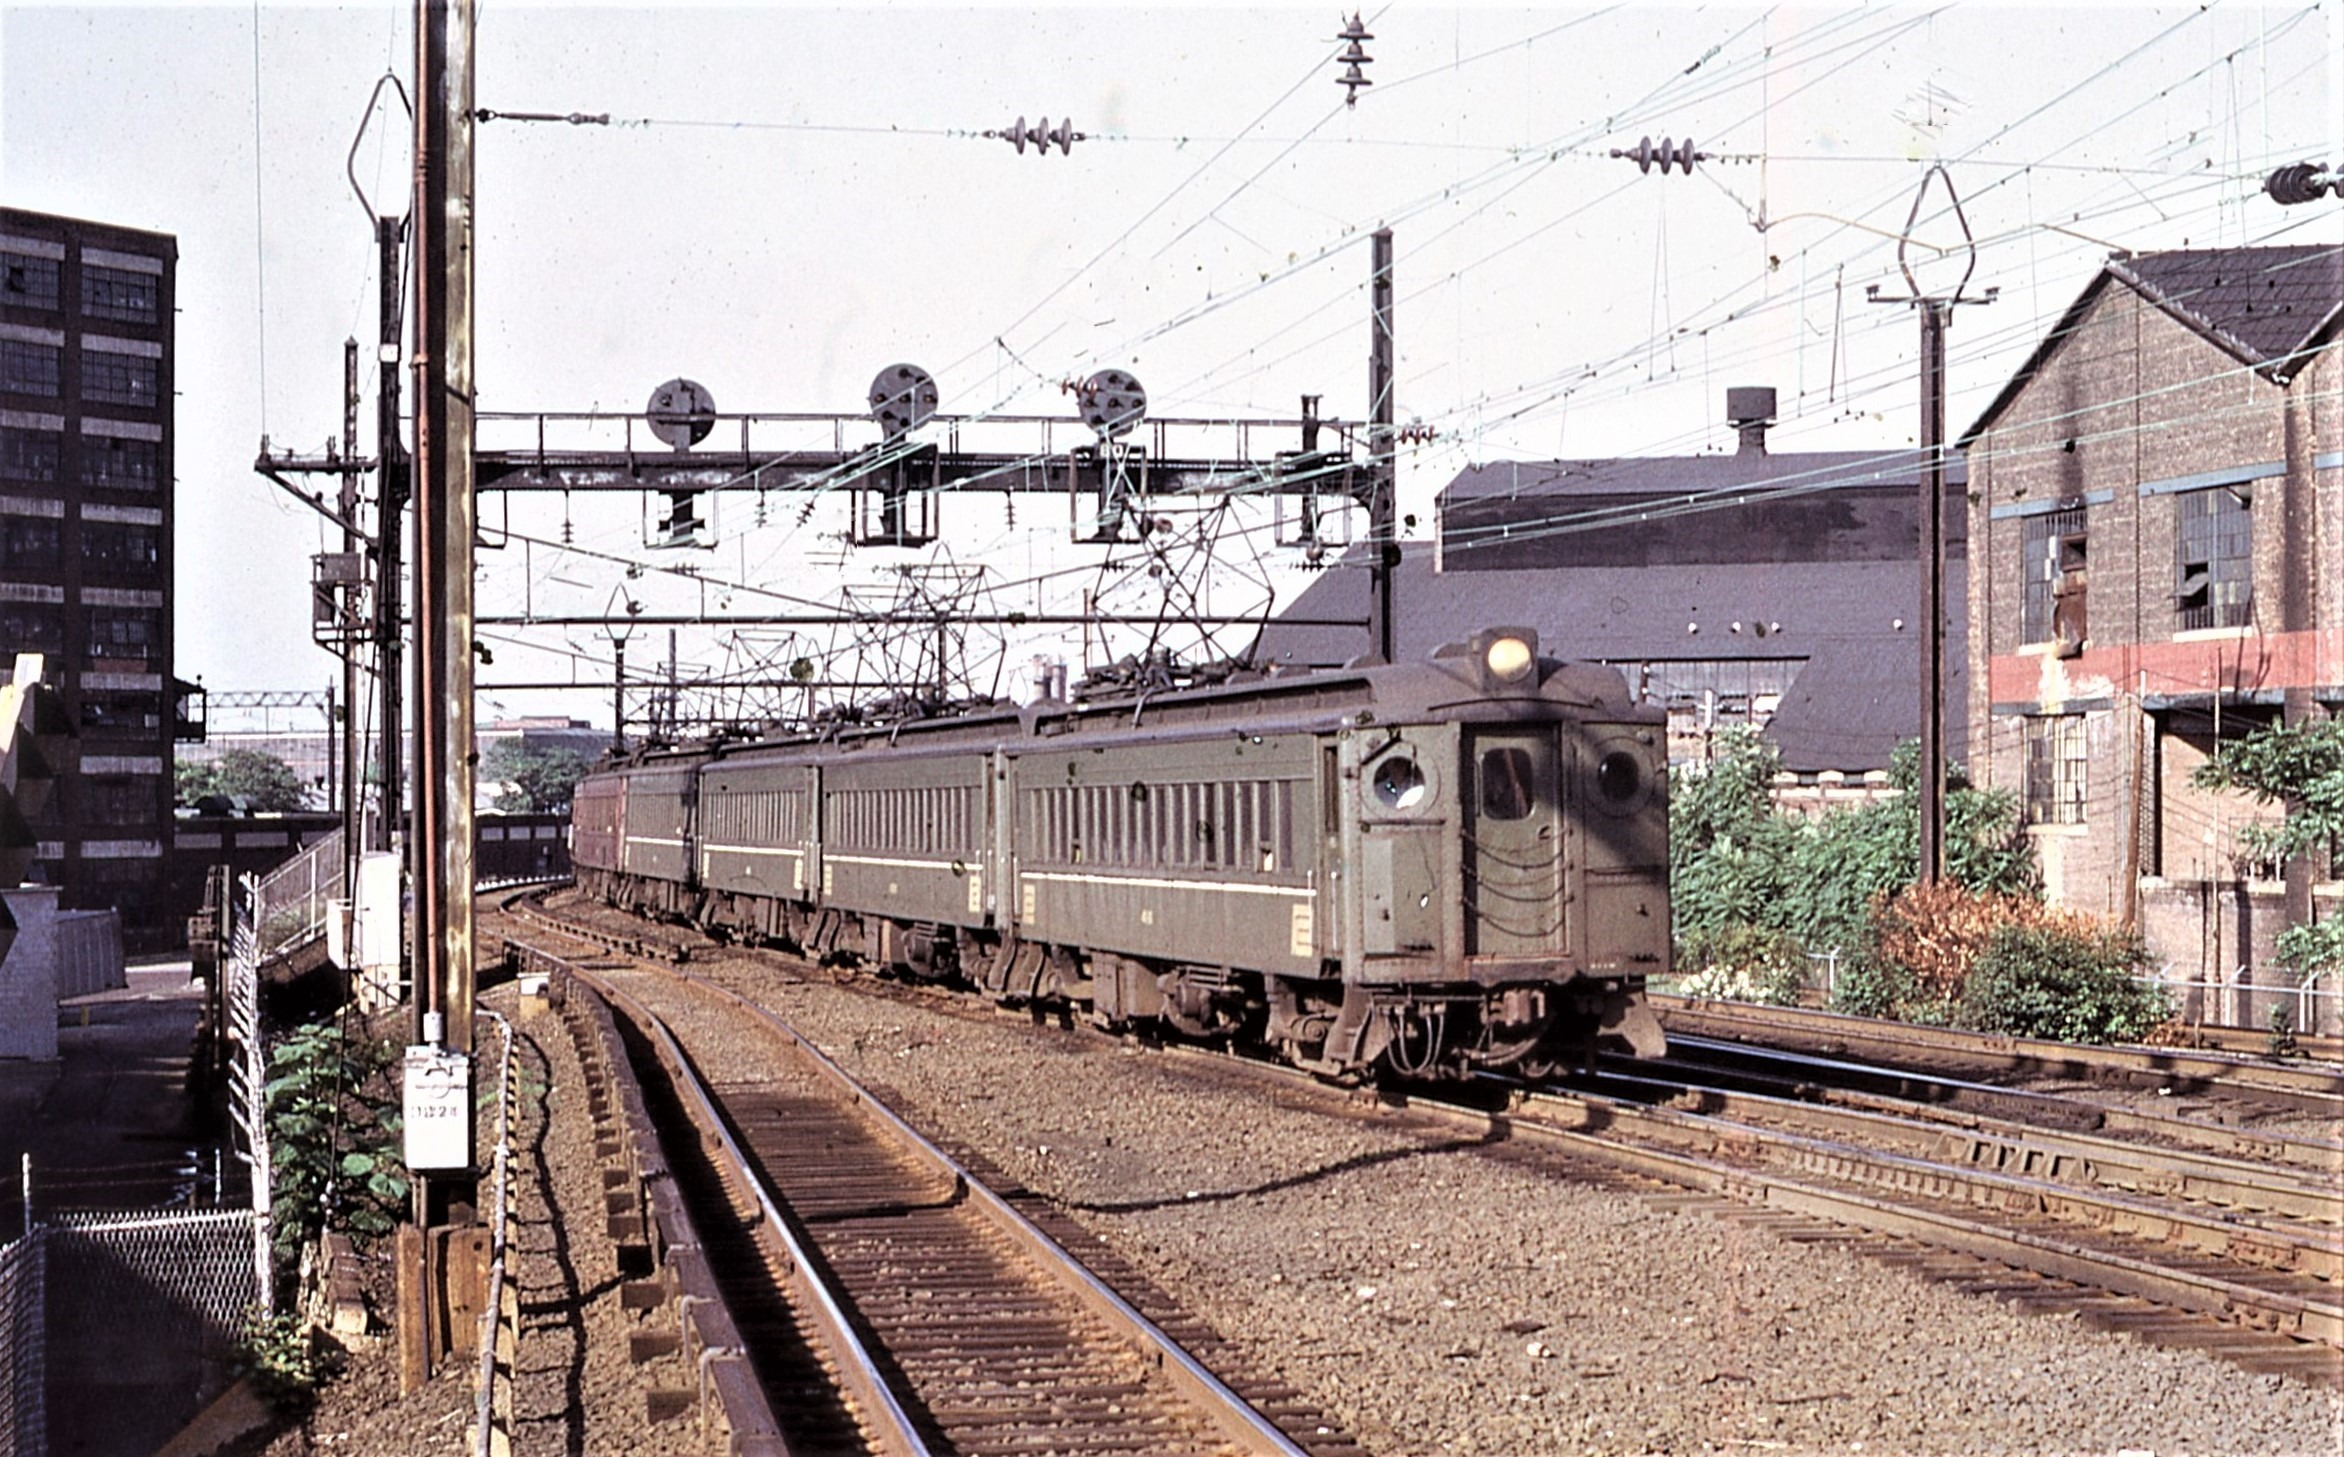 Penn Central Transportation Company | Harrison, New Jersey | MP54 #411 plus train | July 1974 | William Rosenberg photograph